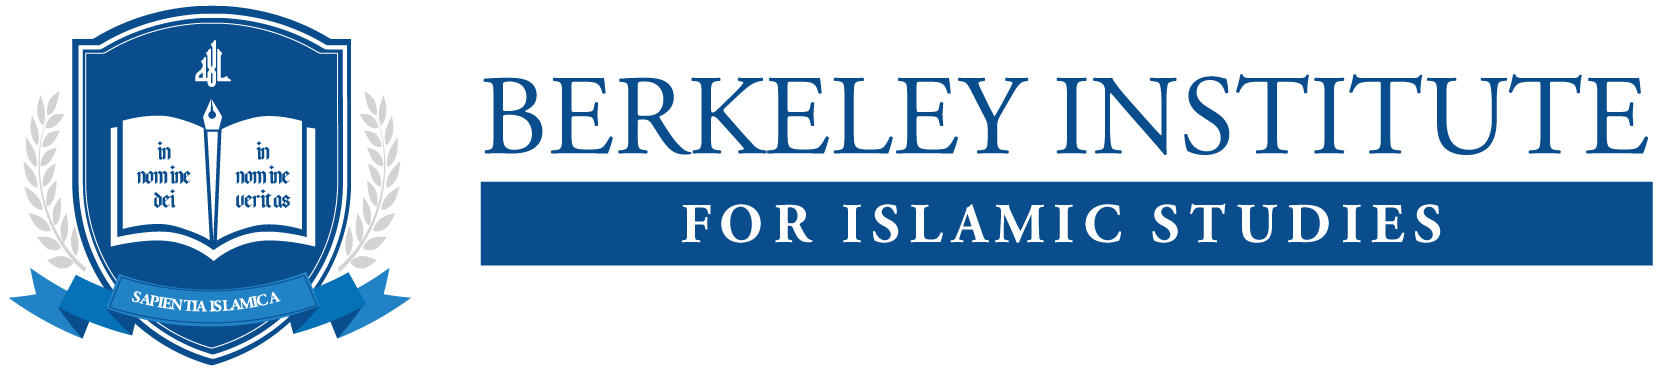 Berkeley Institute for Islamic Studies Logo